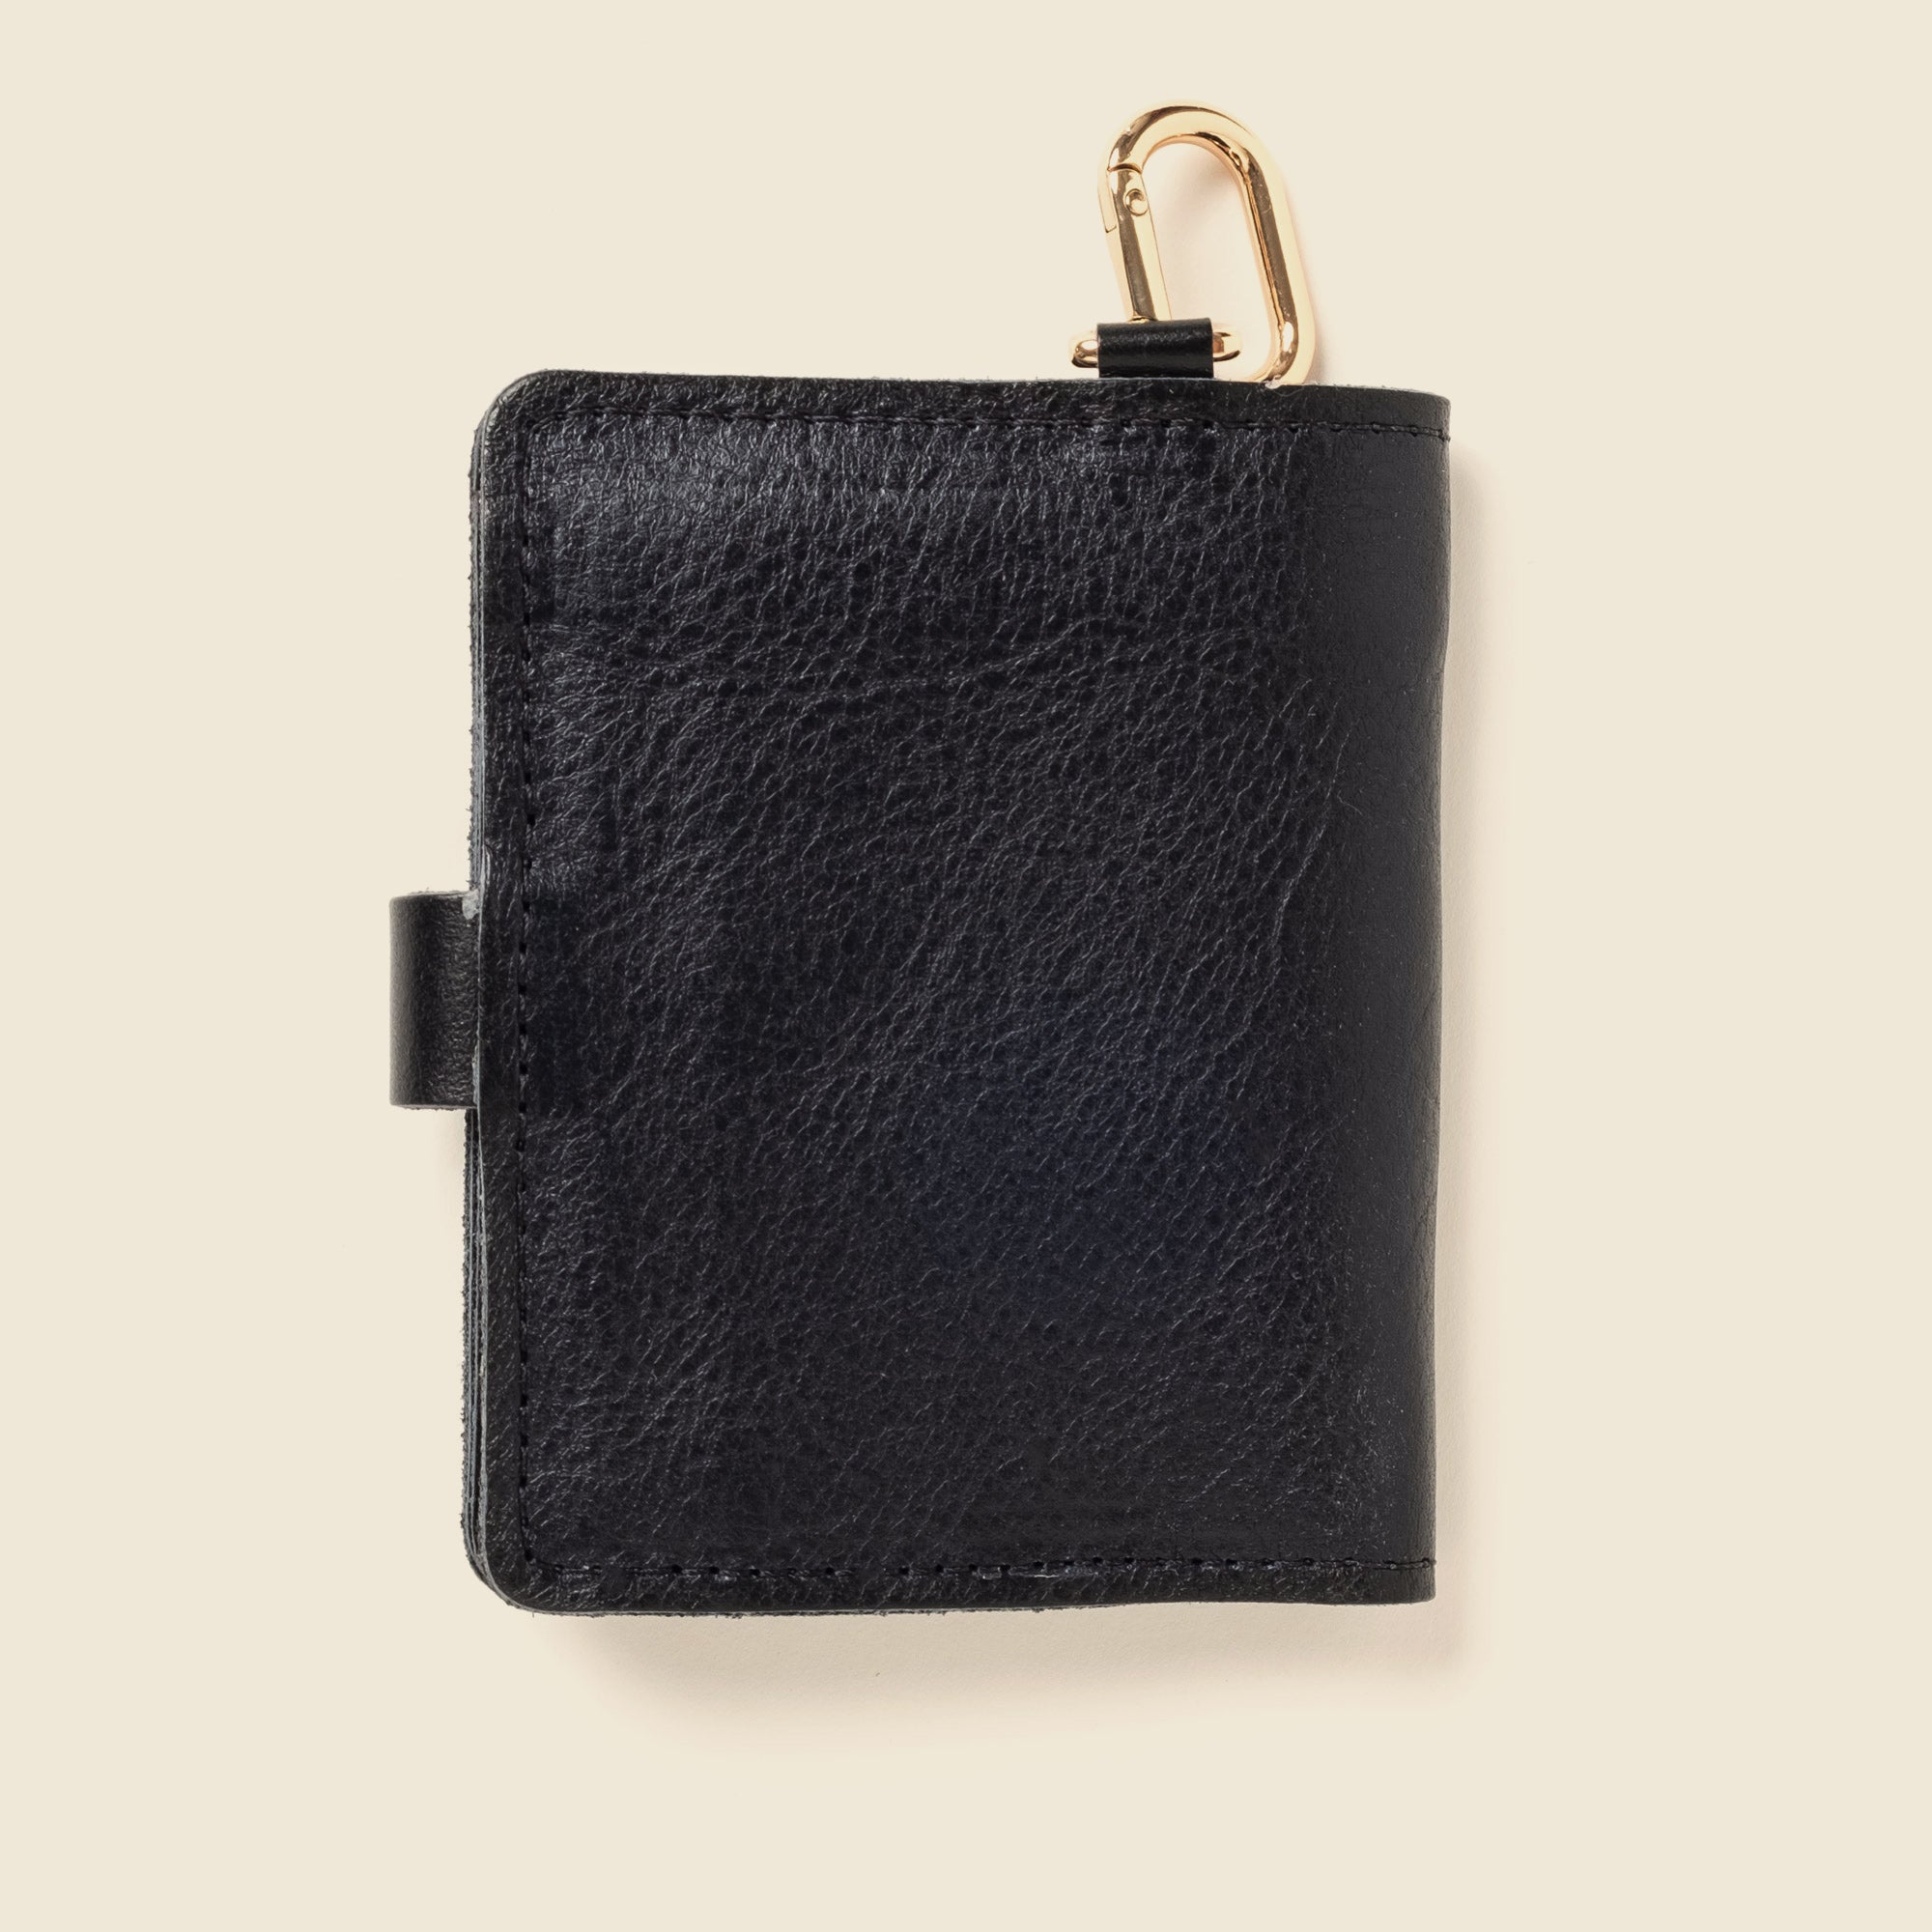 Black leather wallet with gold ring for keys or strap for men